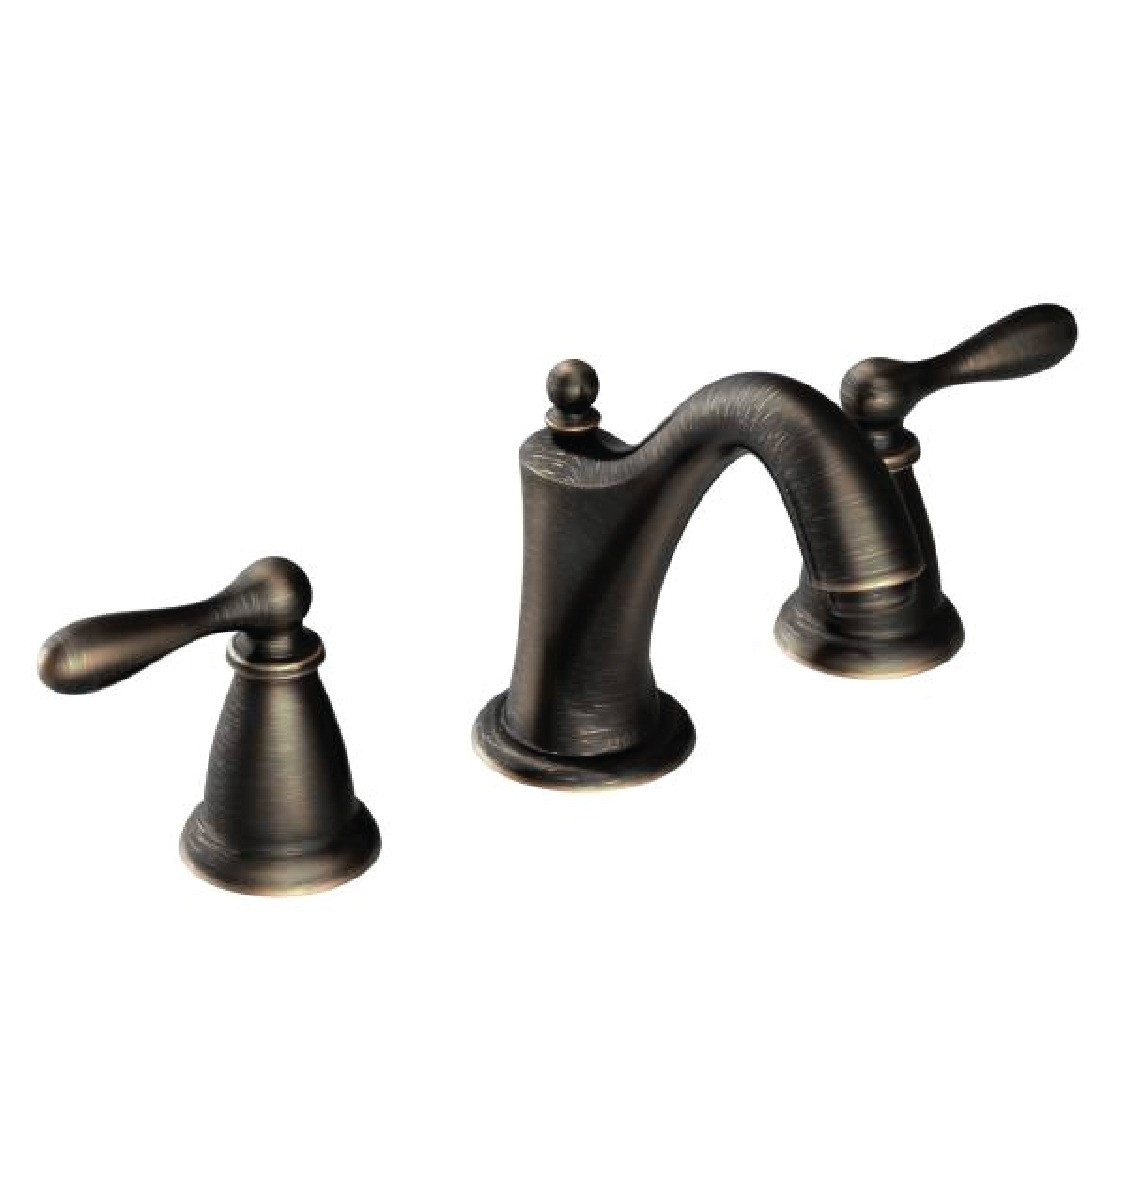 Moen Bronze Bathroom Faucet
 Moen CA BRB Caldwell 4” or 8” Two Handle High Arc